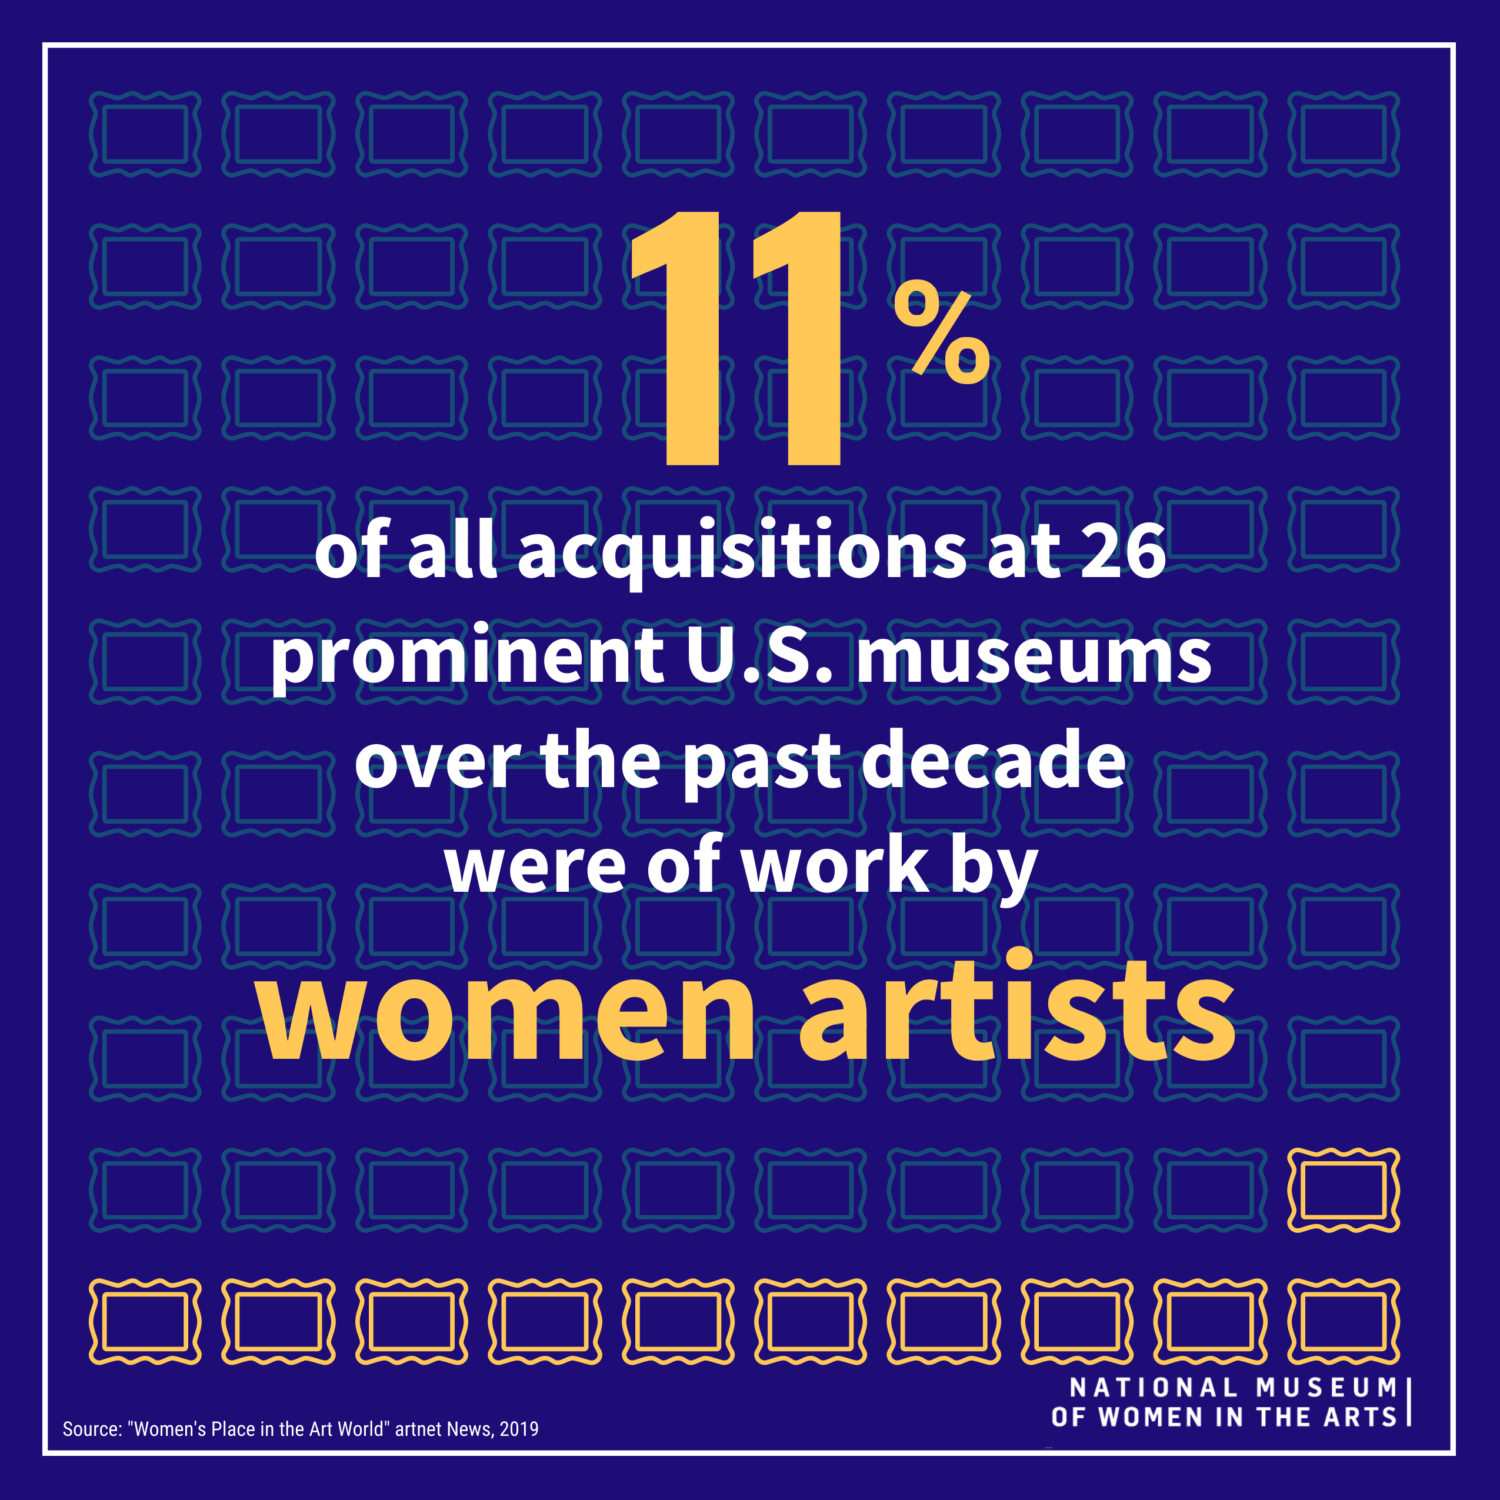 Figure 3: Gender disparities in visual art. Source: National Museum of Women’s Art.